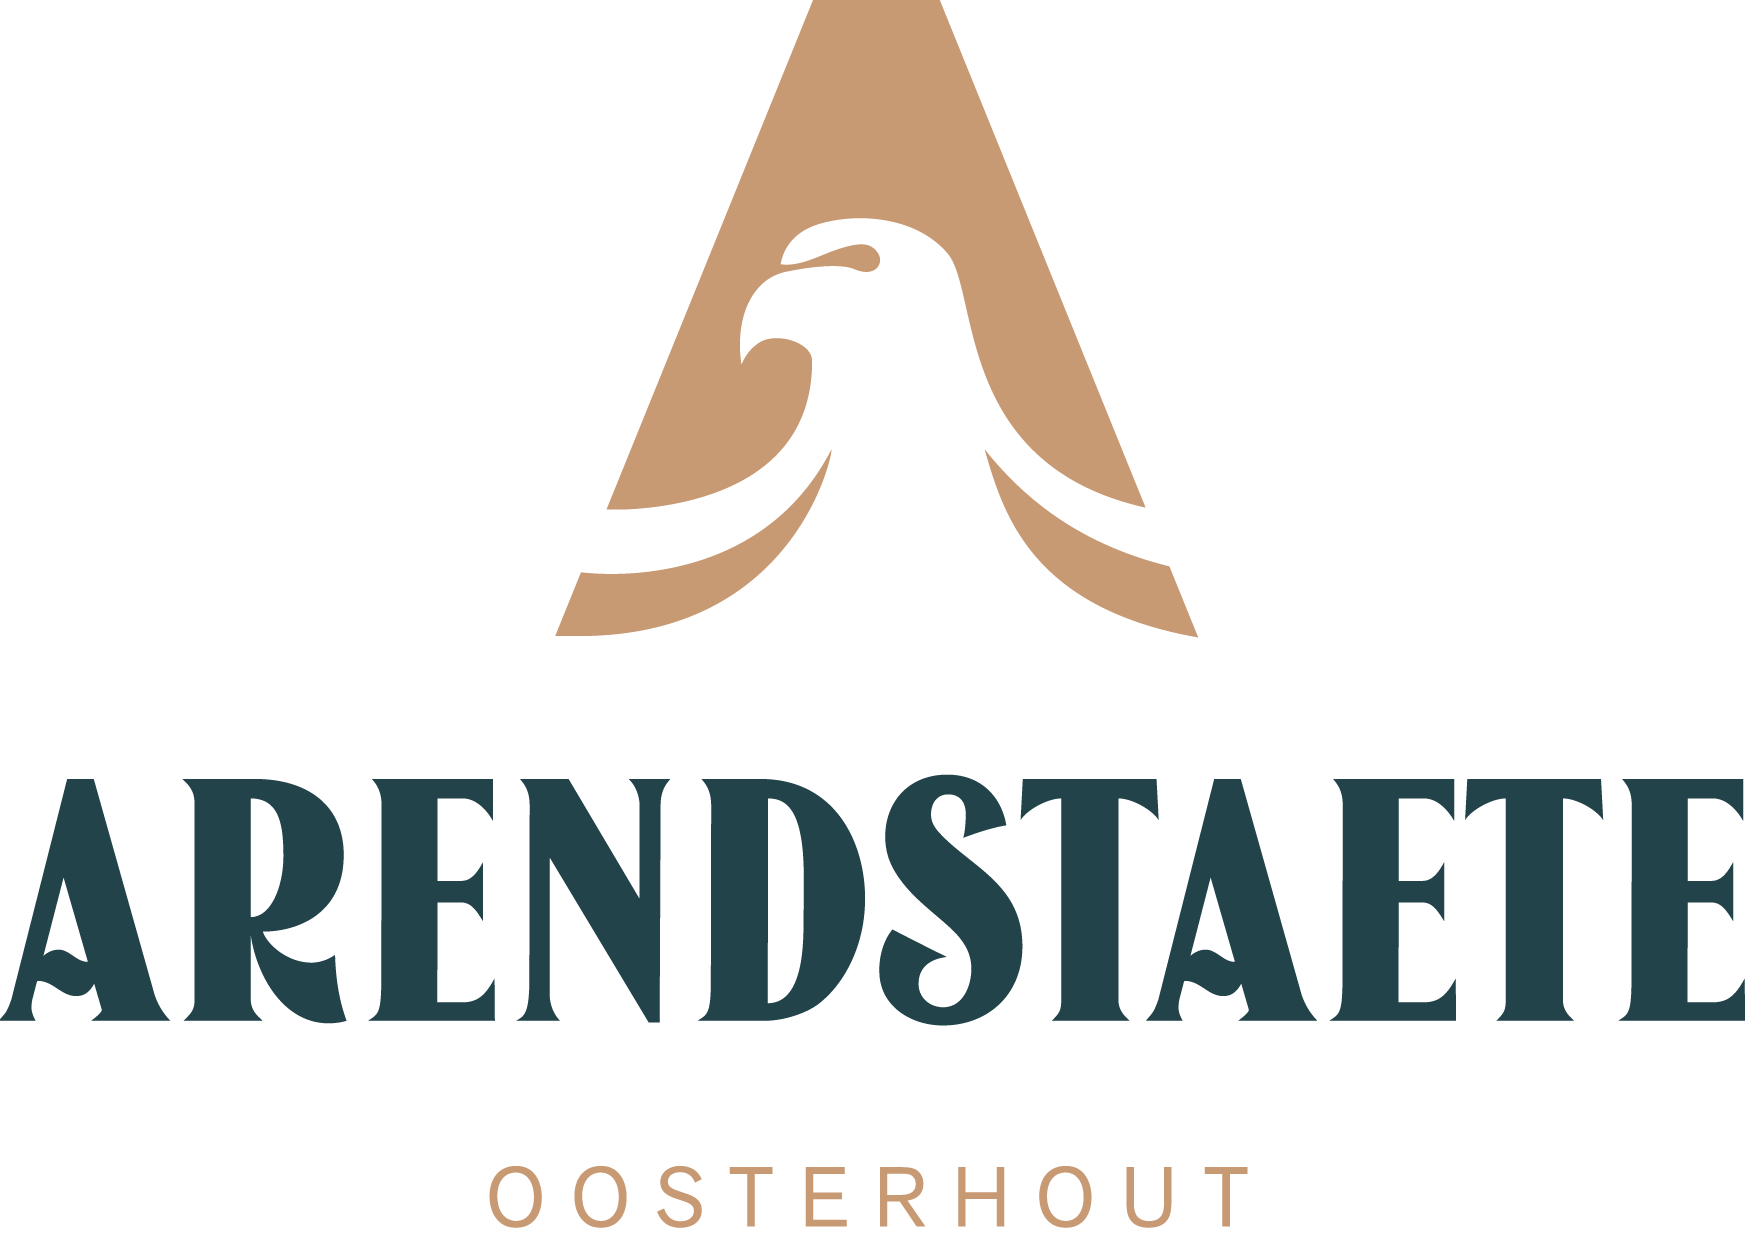 Arendstaete Oosterhout